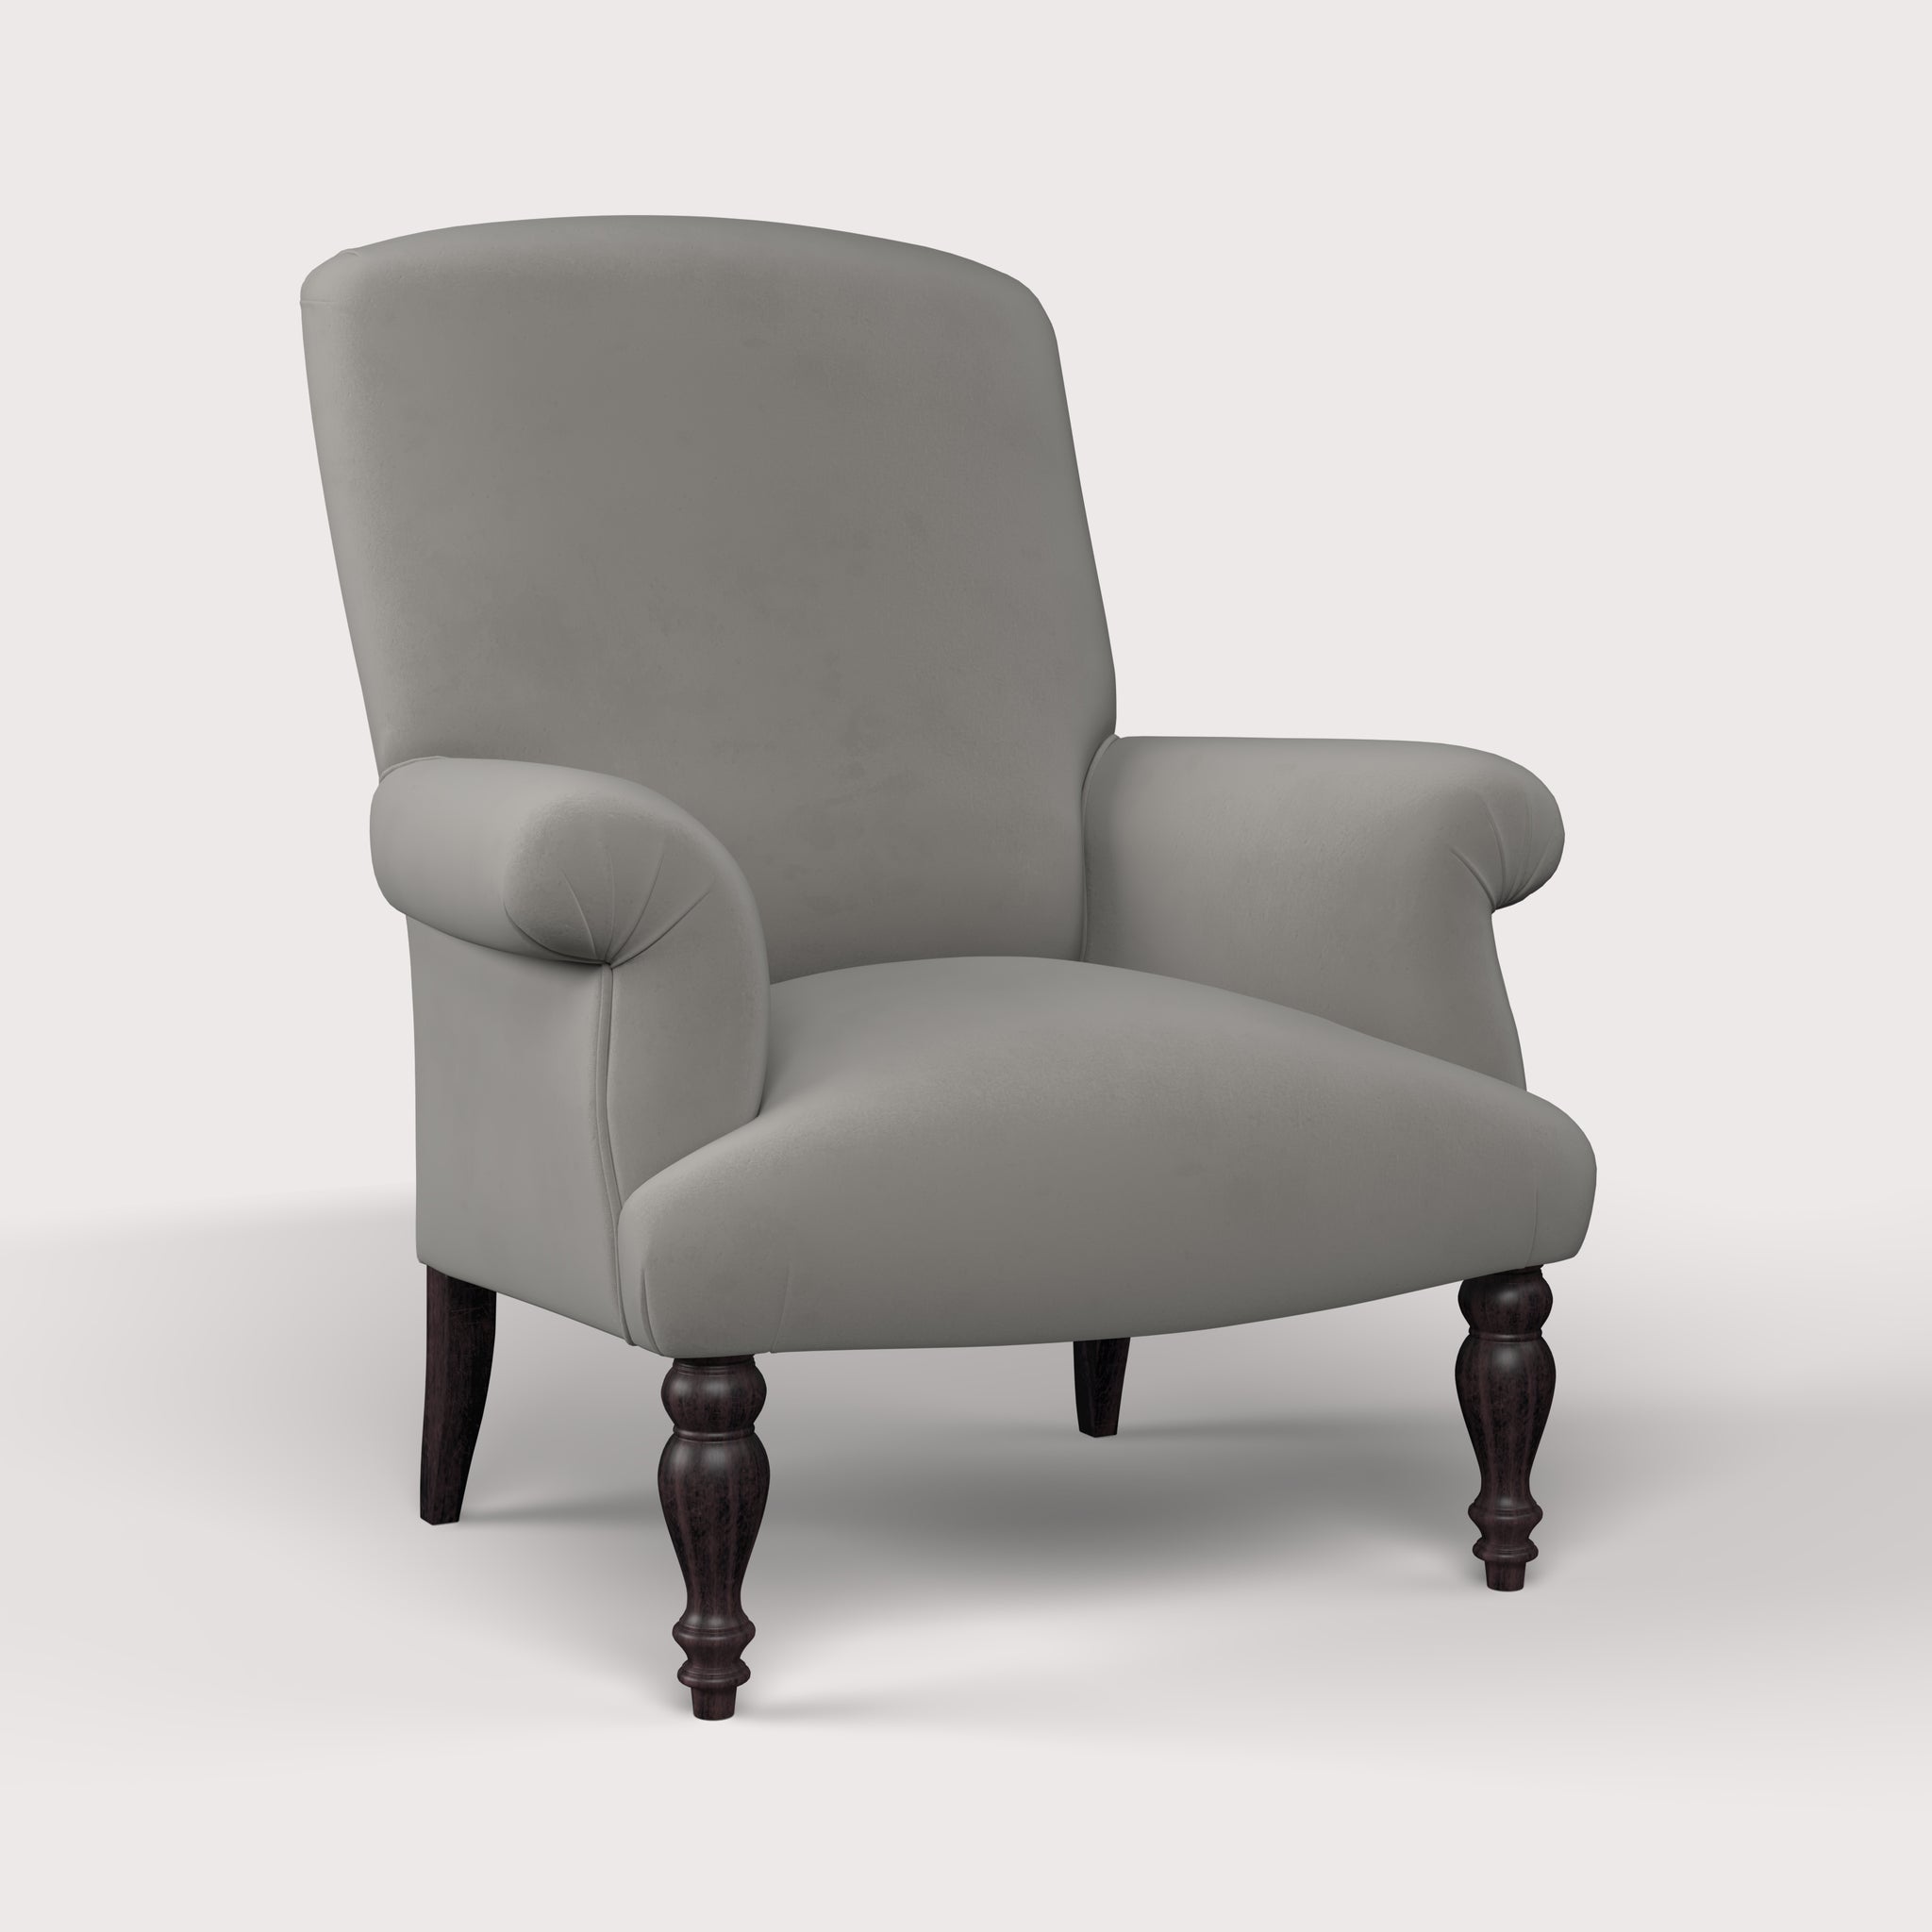 The Austen Armchair